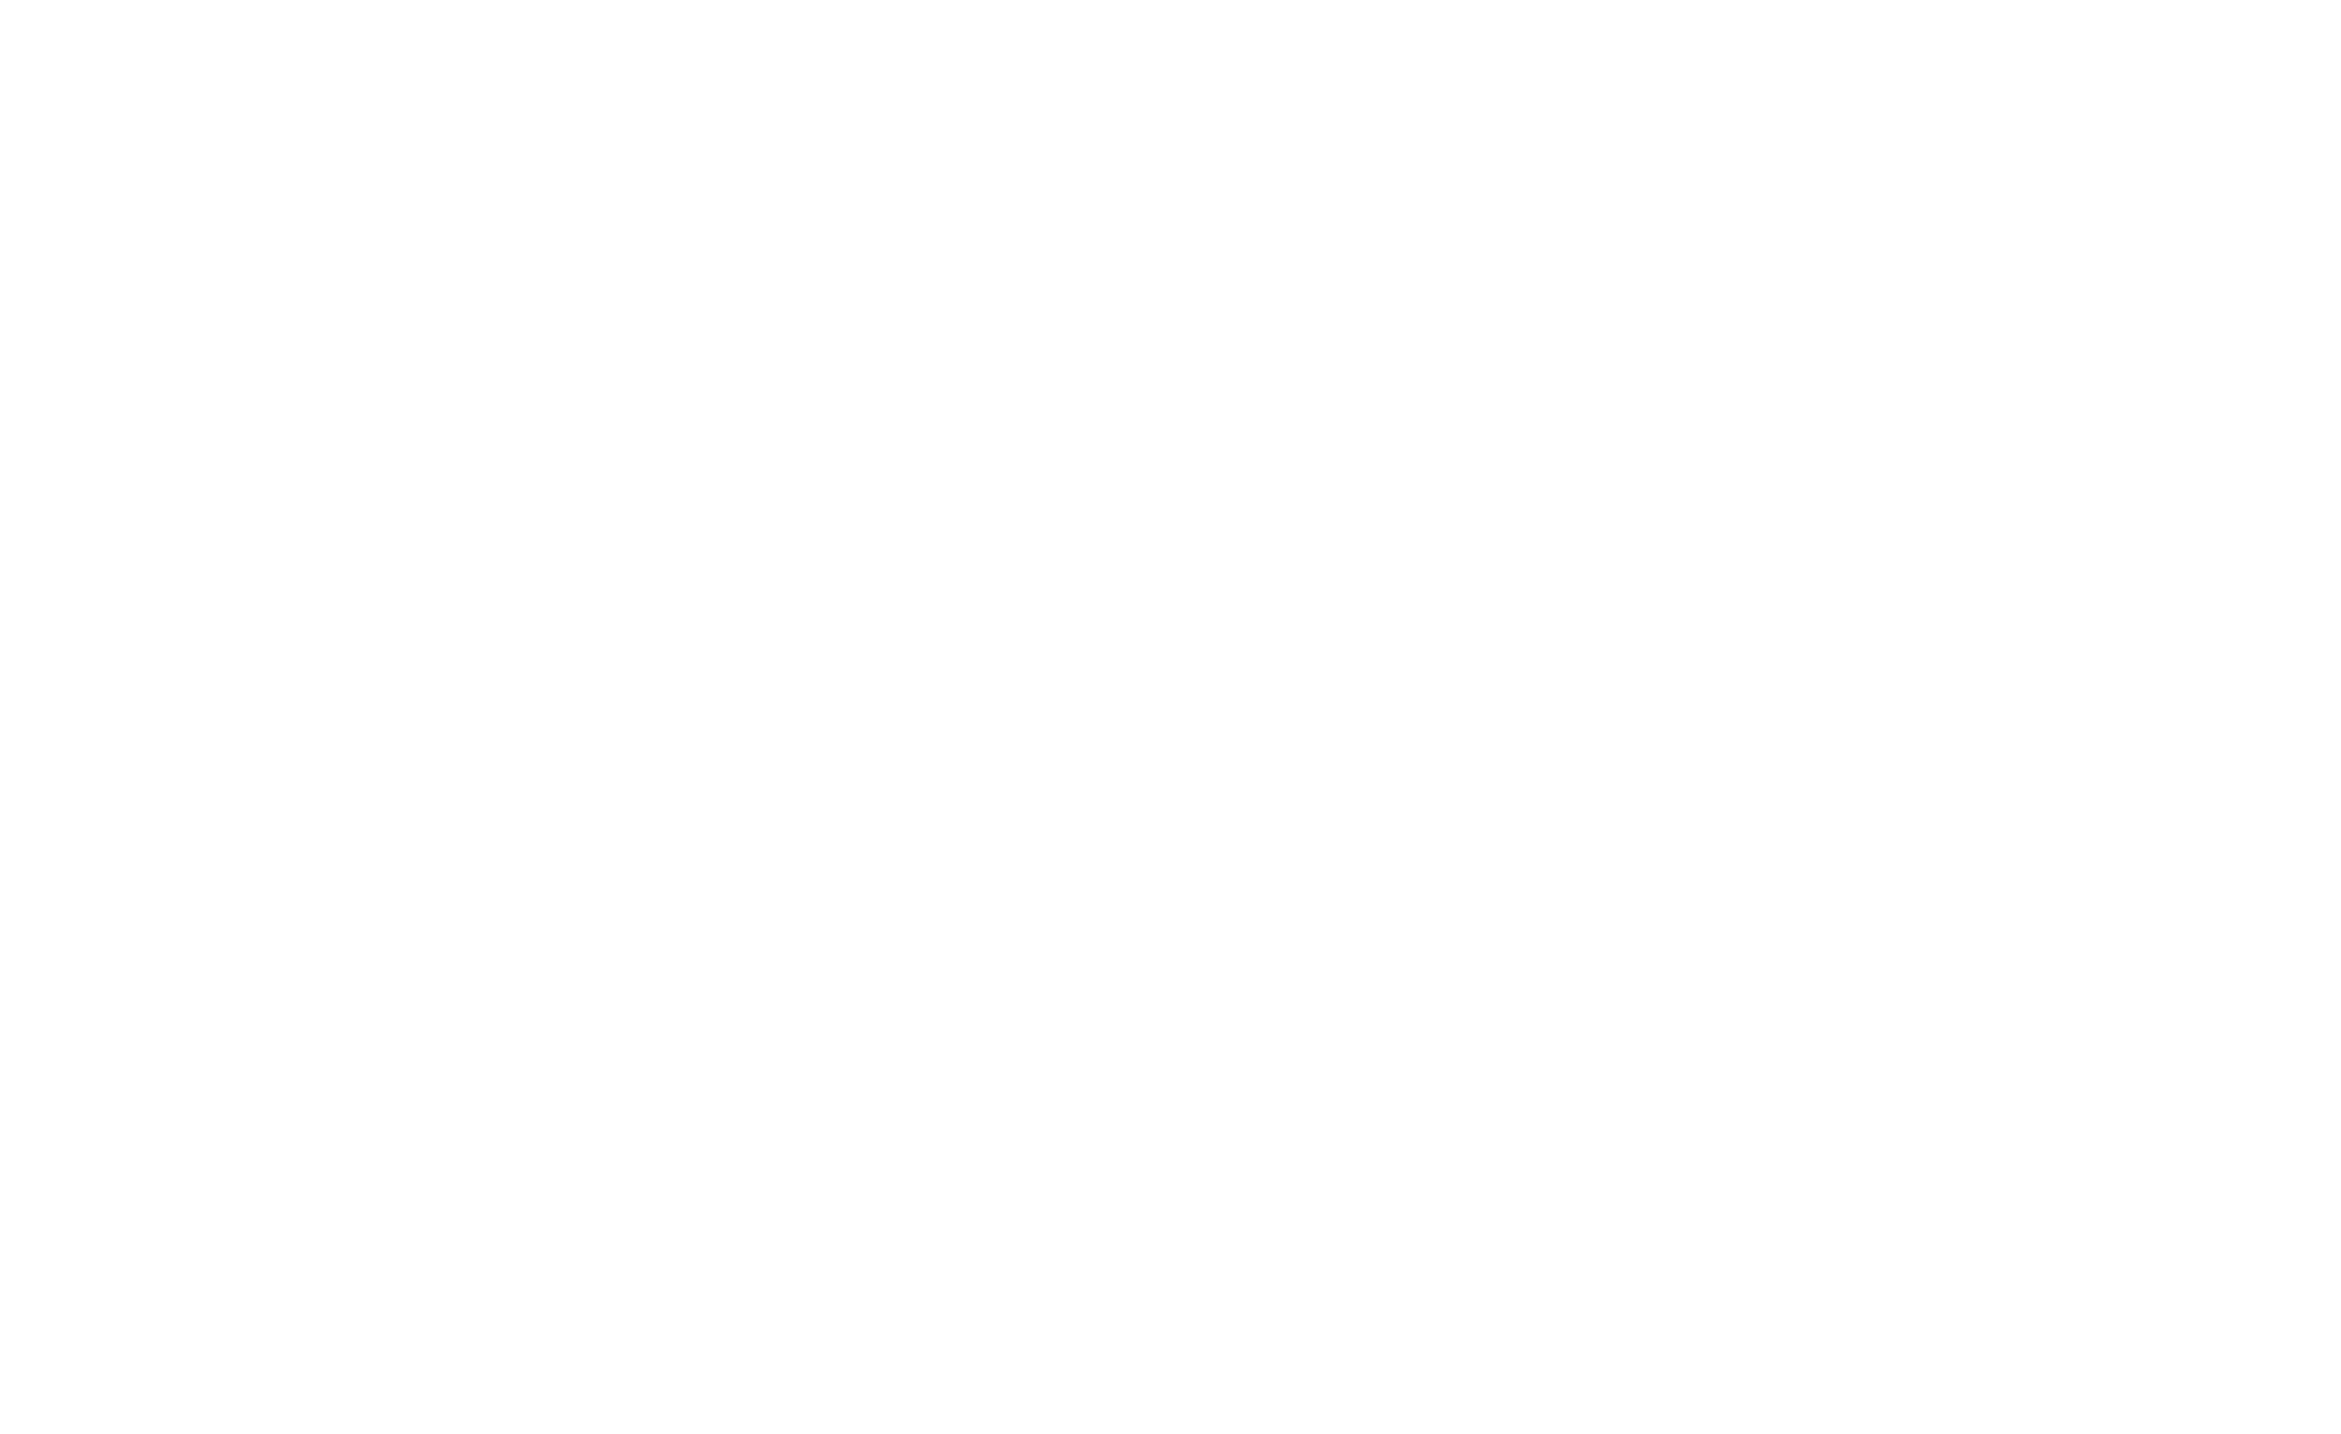 Paze Industries